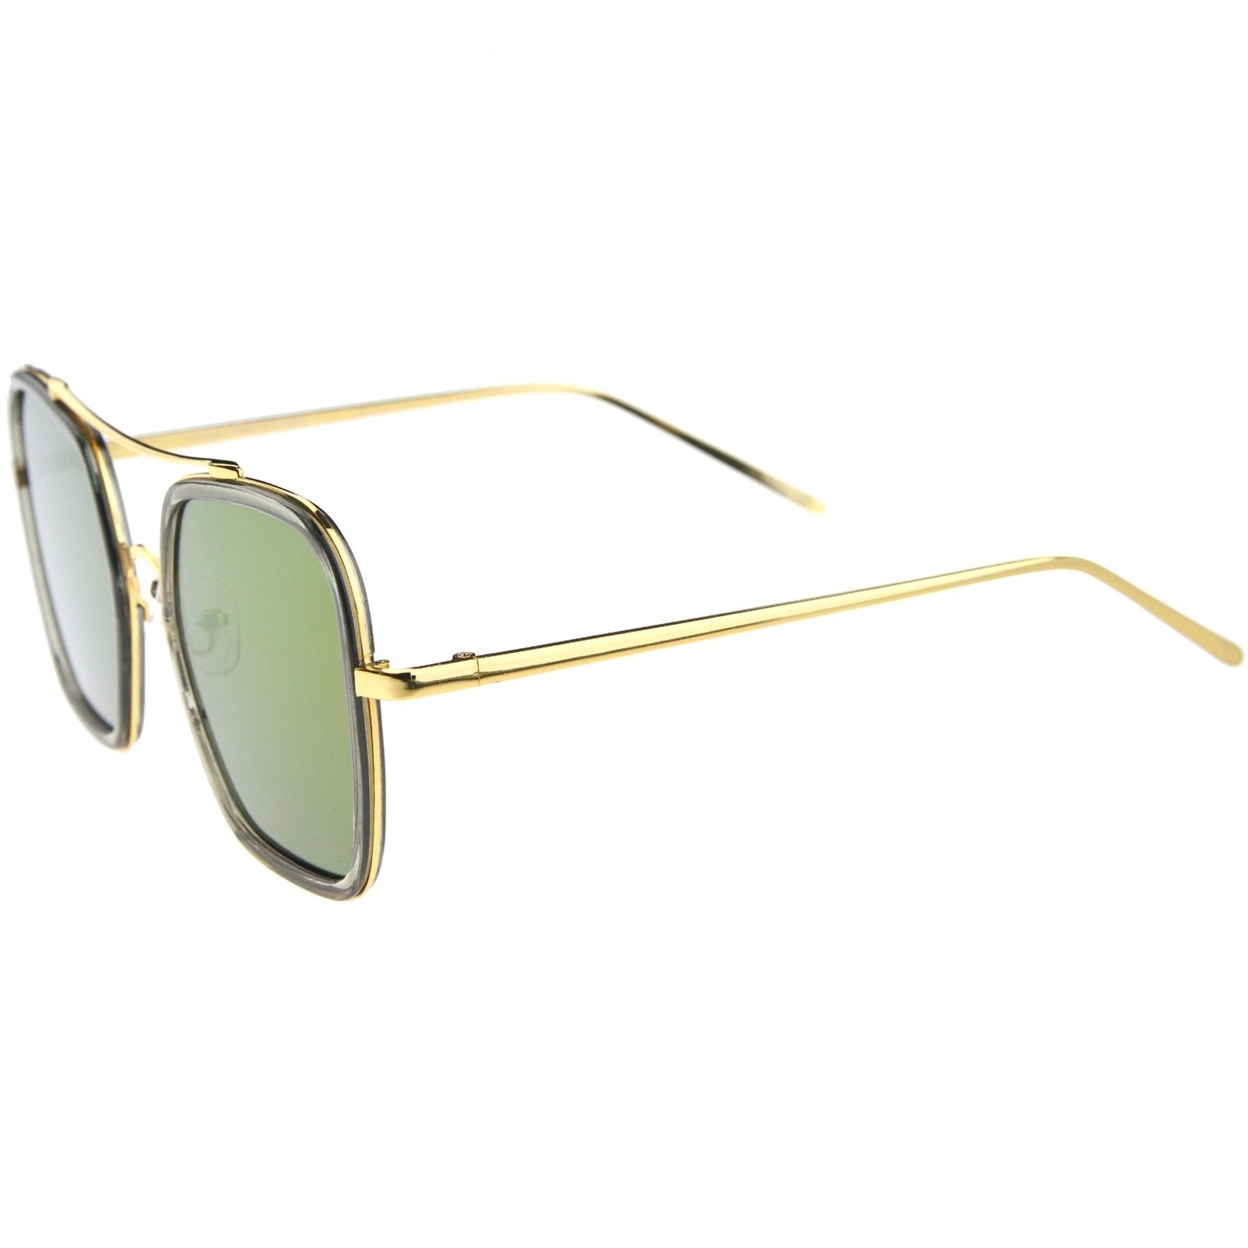 Modern Slim Temple Browbar Color Mirrored Flat Lens Square Sunglasses 52mm - Pink-Gold / Magenta Mirror